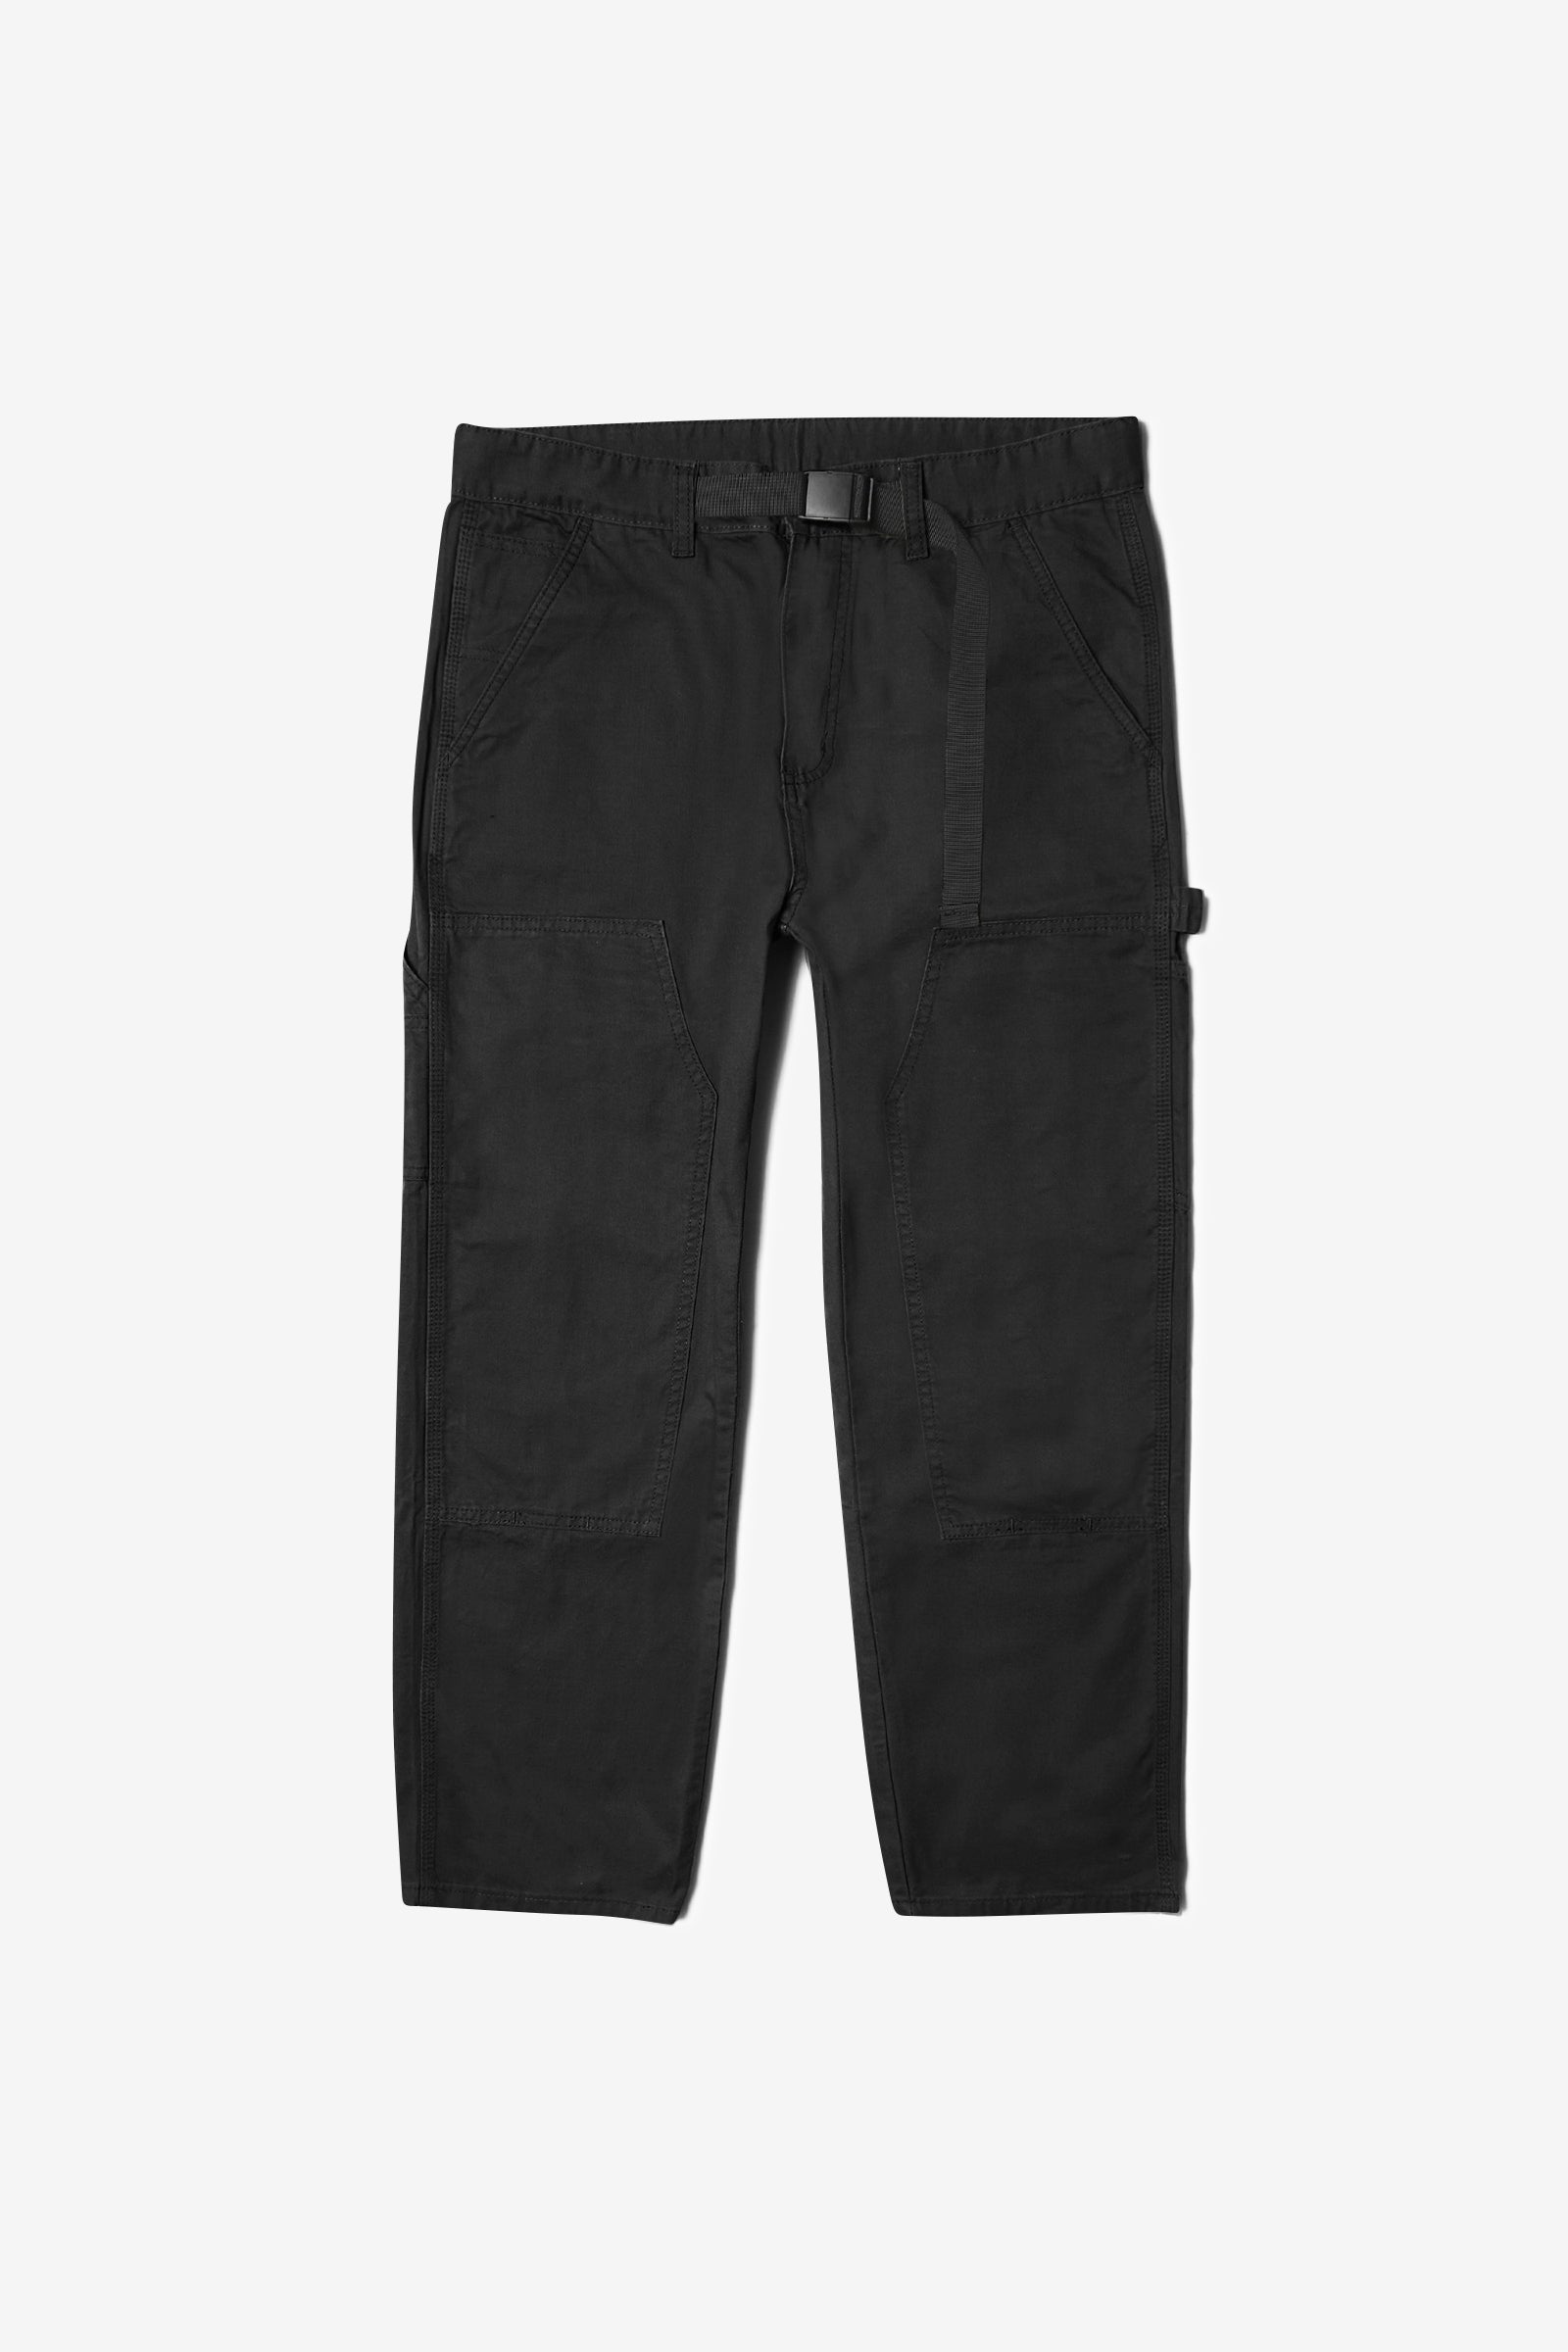 Blacksmith - Double Knee Carpenter Pants - Black